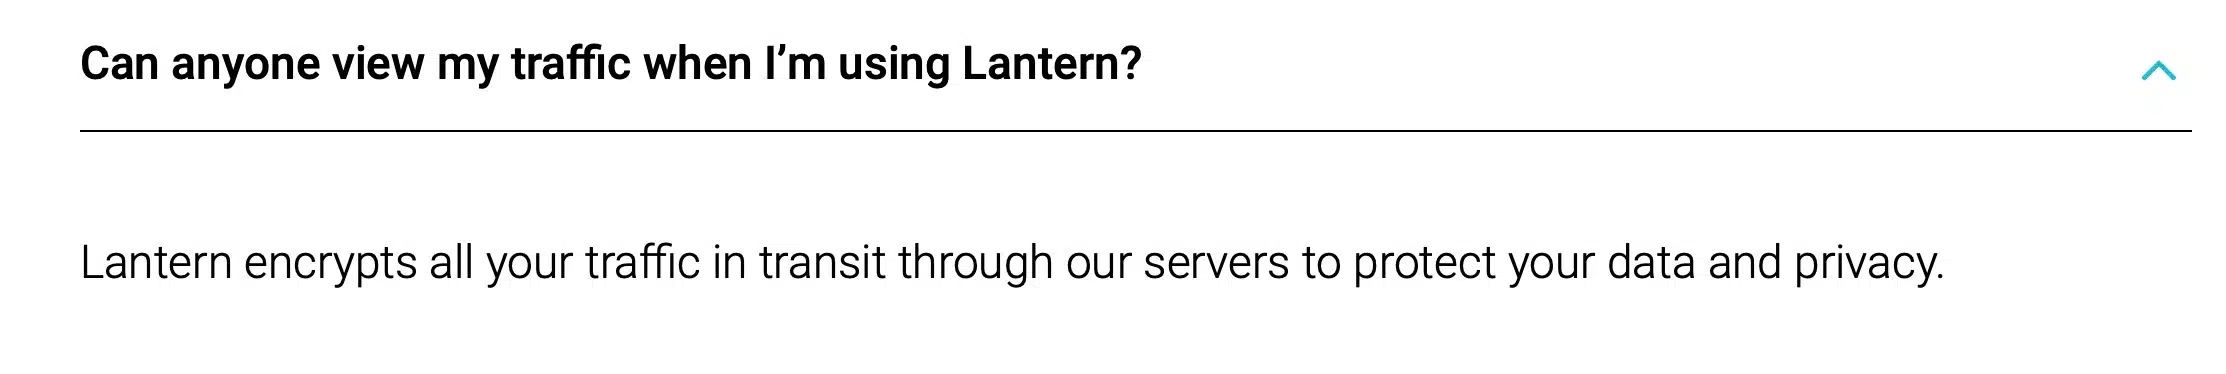 Lantern - Encryption